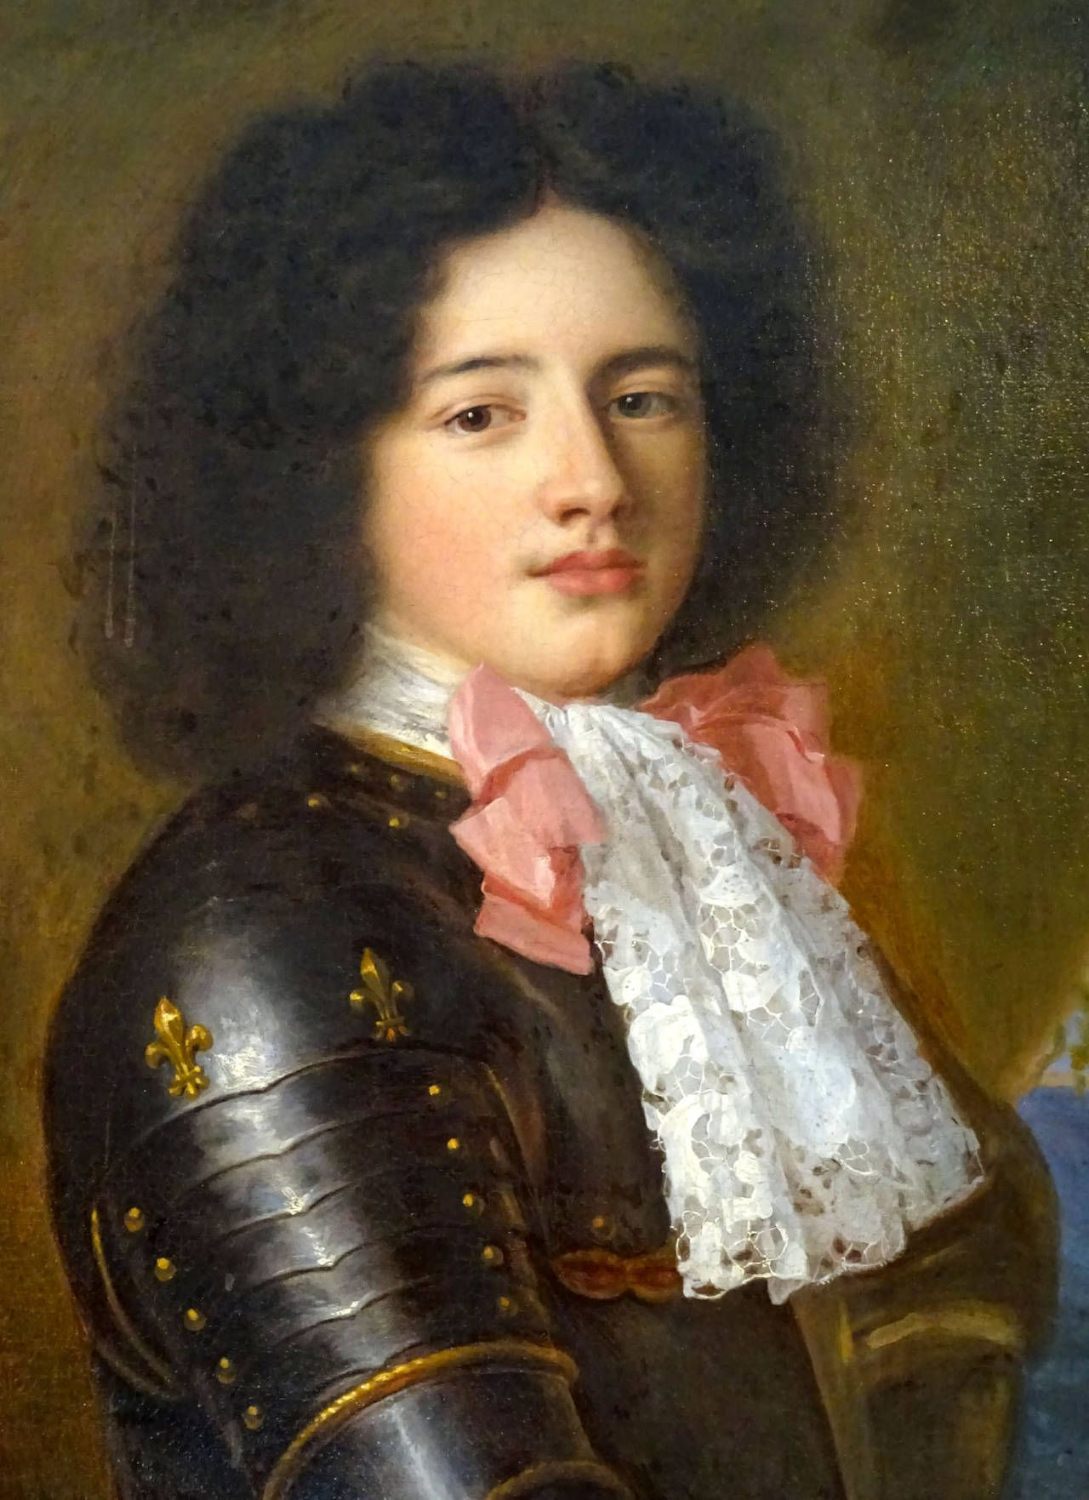 The Bastard Prince of Versailles